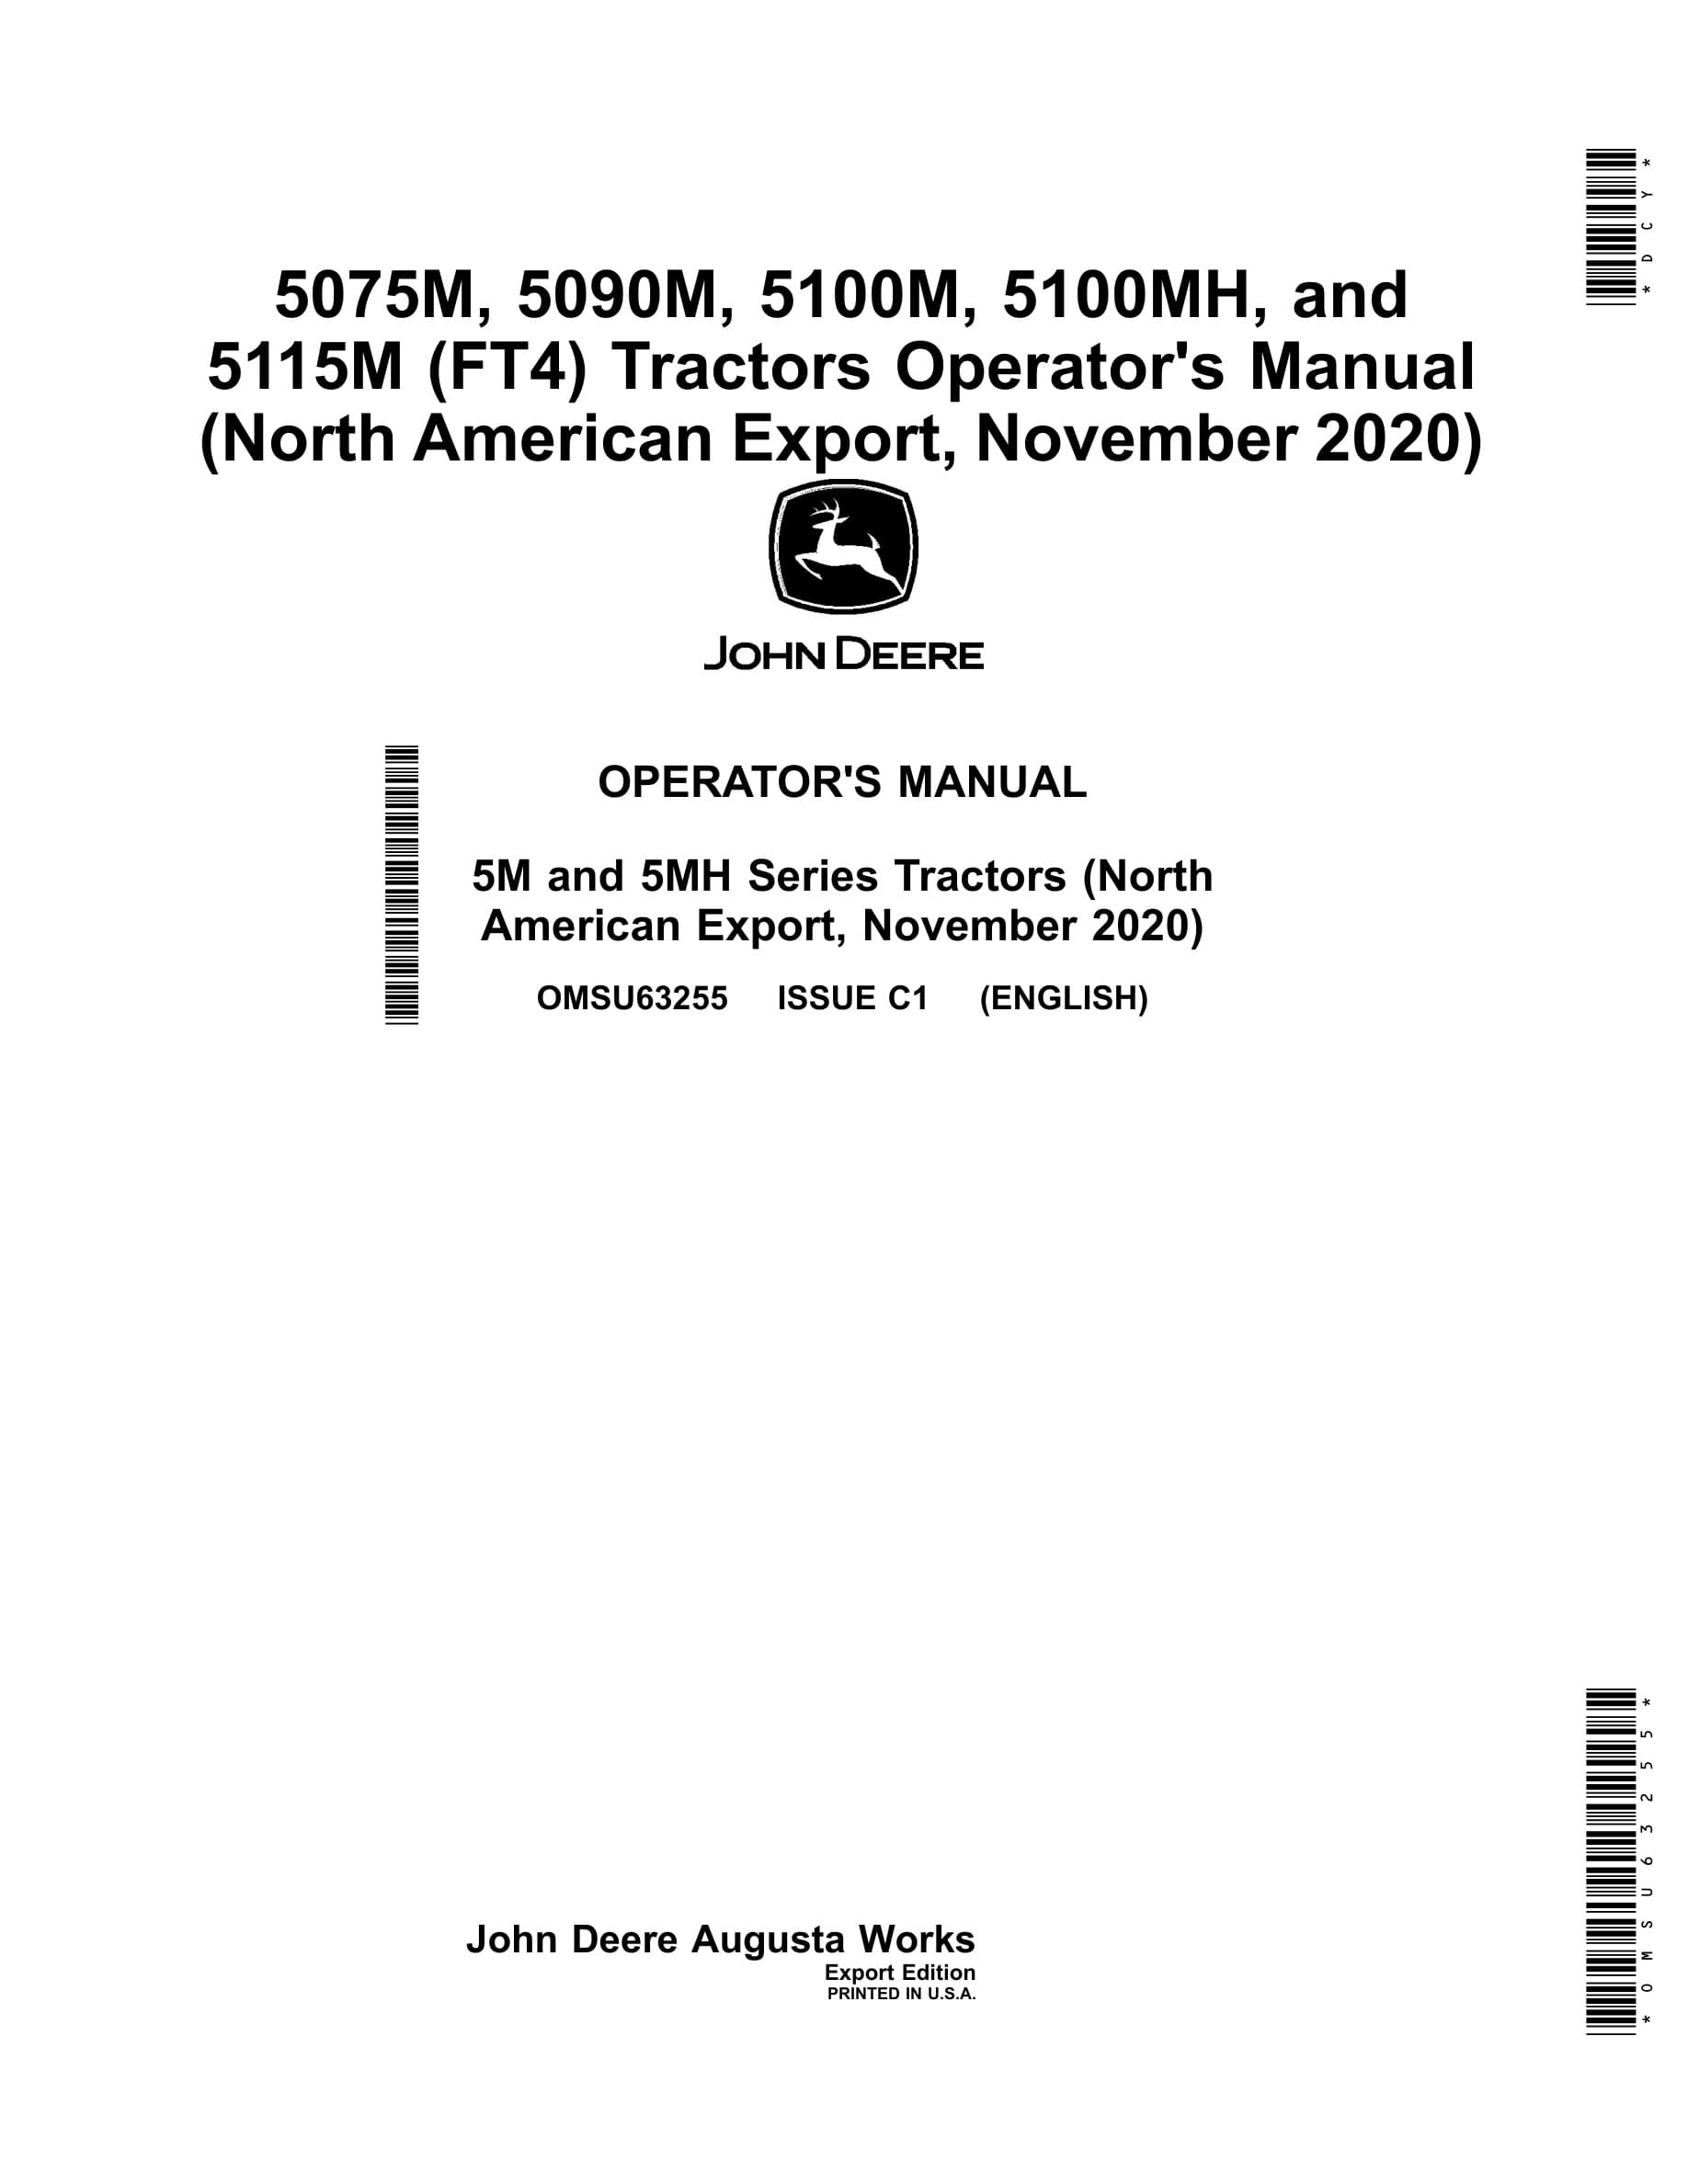 John Deere 5075m, 5090m, 5100m, 5100mh, And 5115m (ft4) Tractors Operator Manuals OMSU63255-1